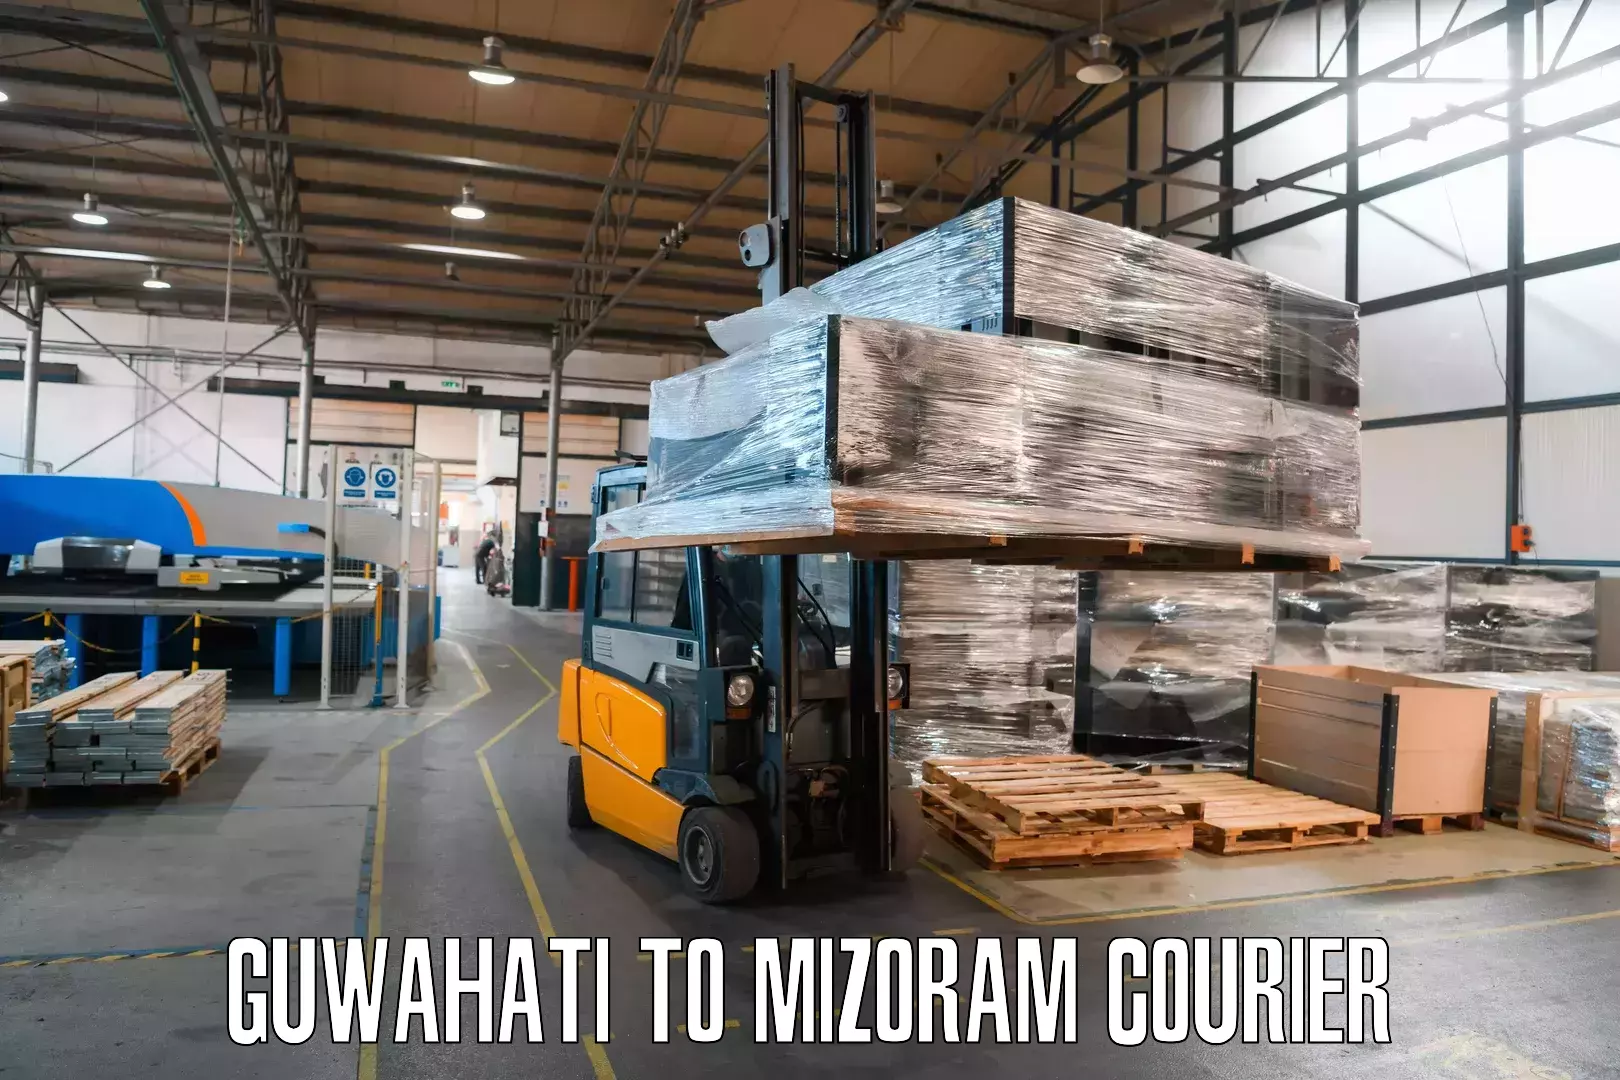 Courier service comparison Guwahati to Serchhip